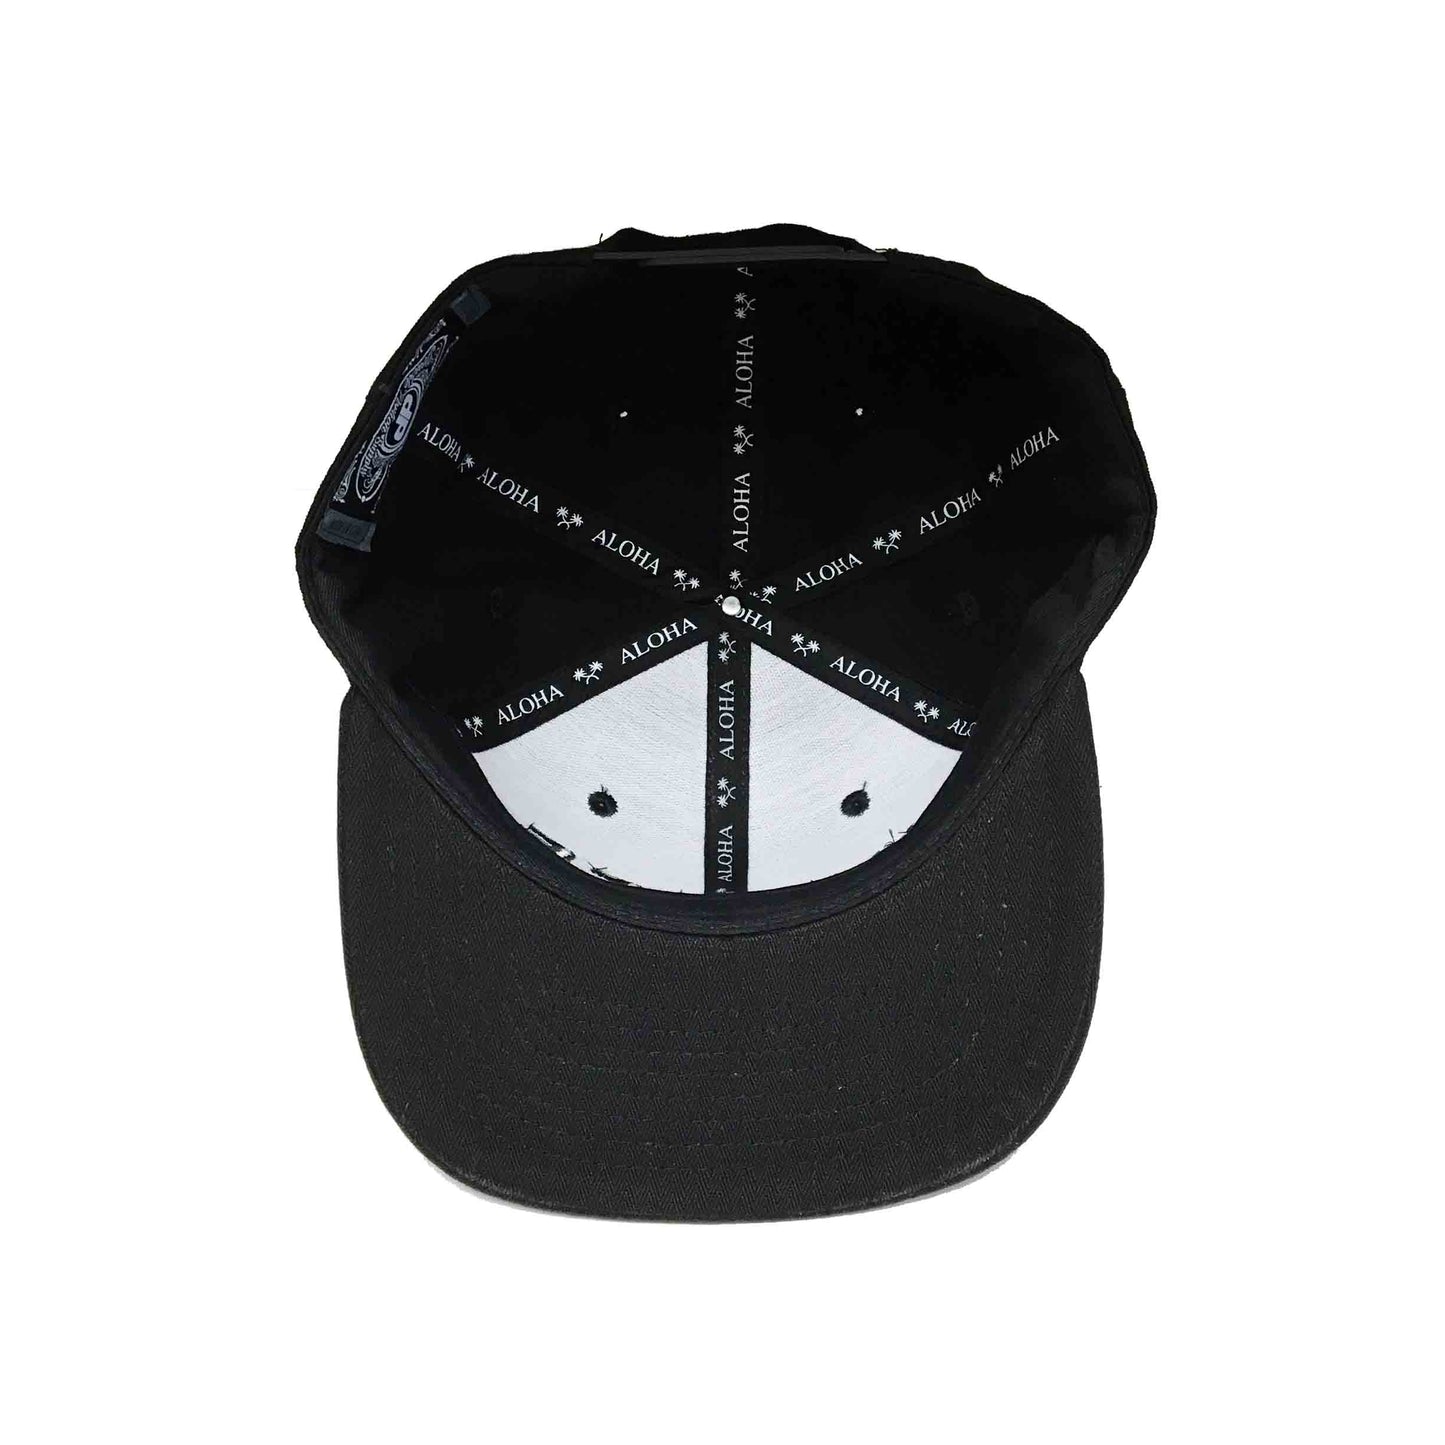 HILIFE 3D logo Snapback hats Black on Black